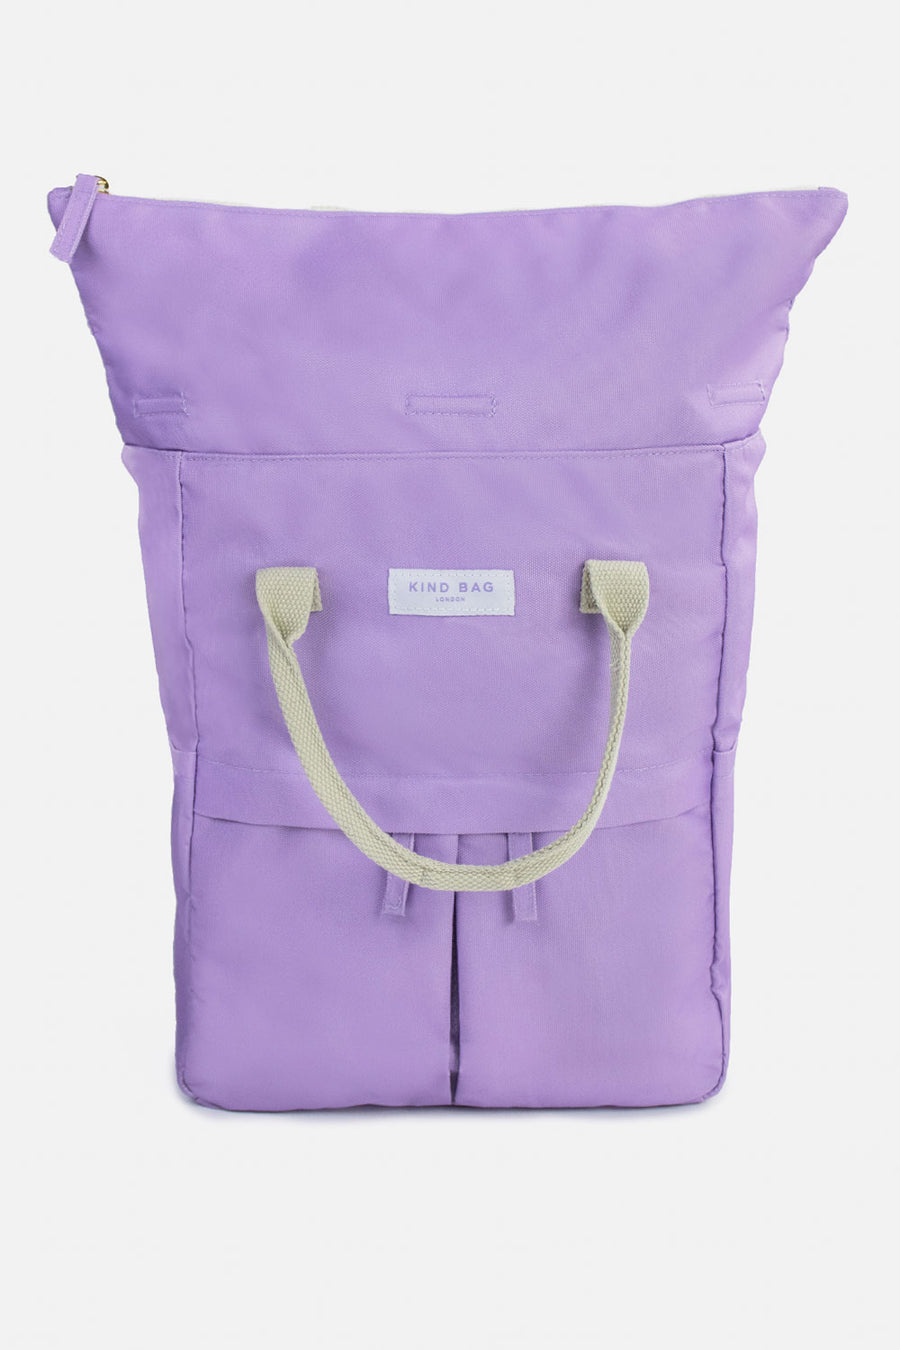 Lavender | “Hackney” 2.0 Backpack | Medium